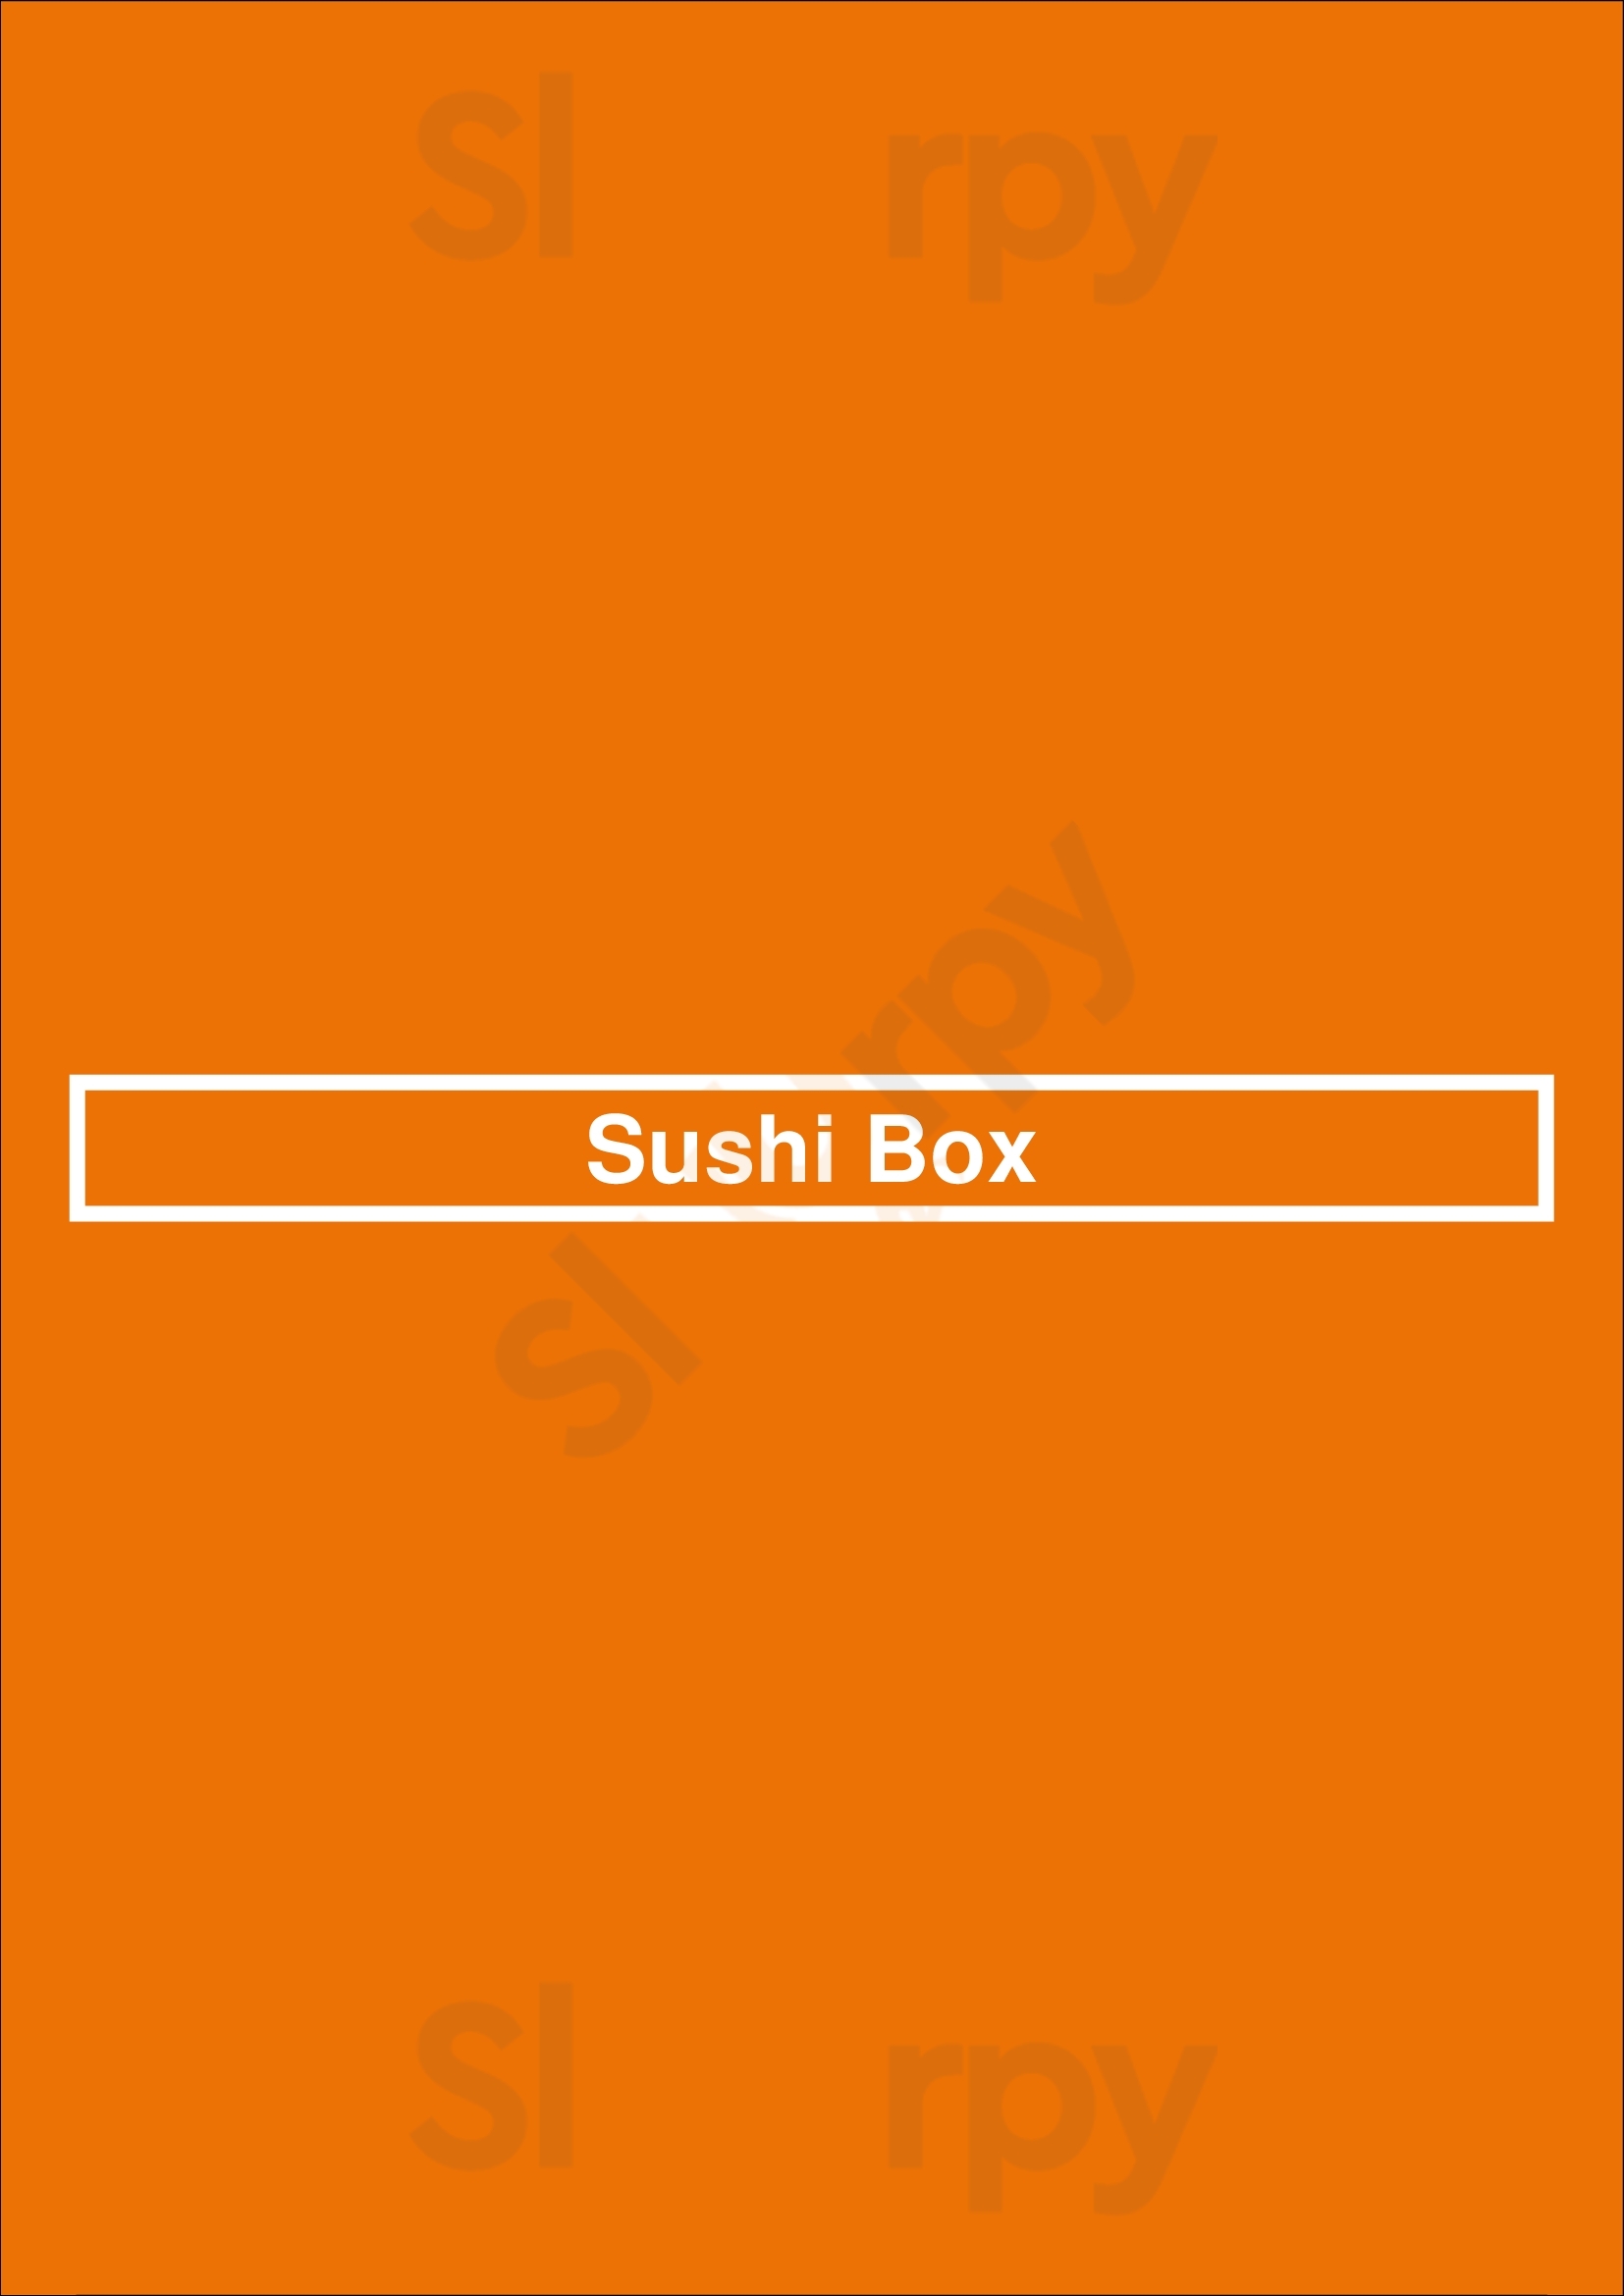 Sushi Box Abbotsford Menu - 1